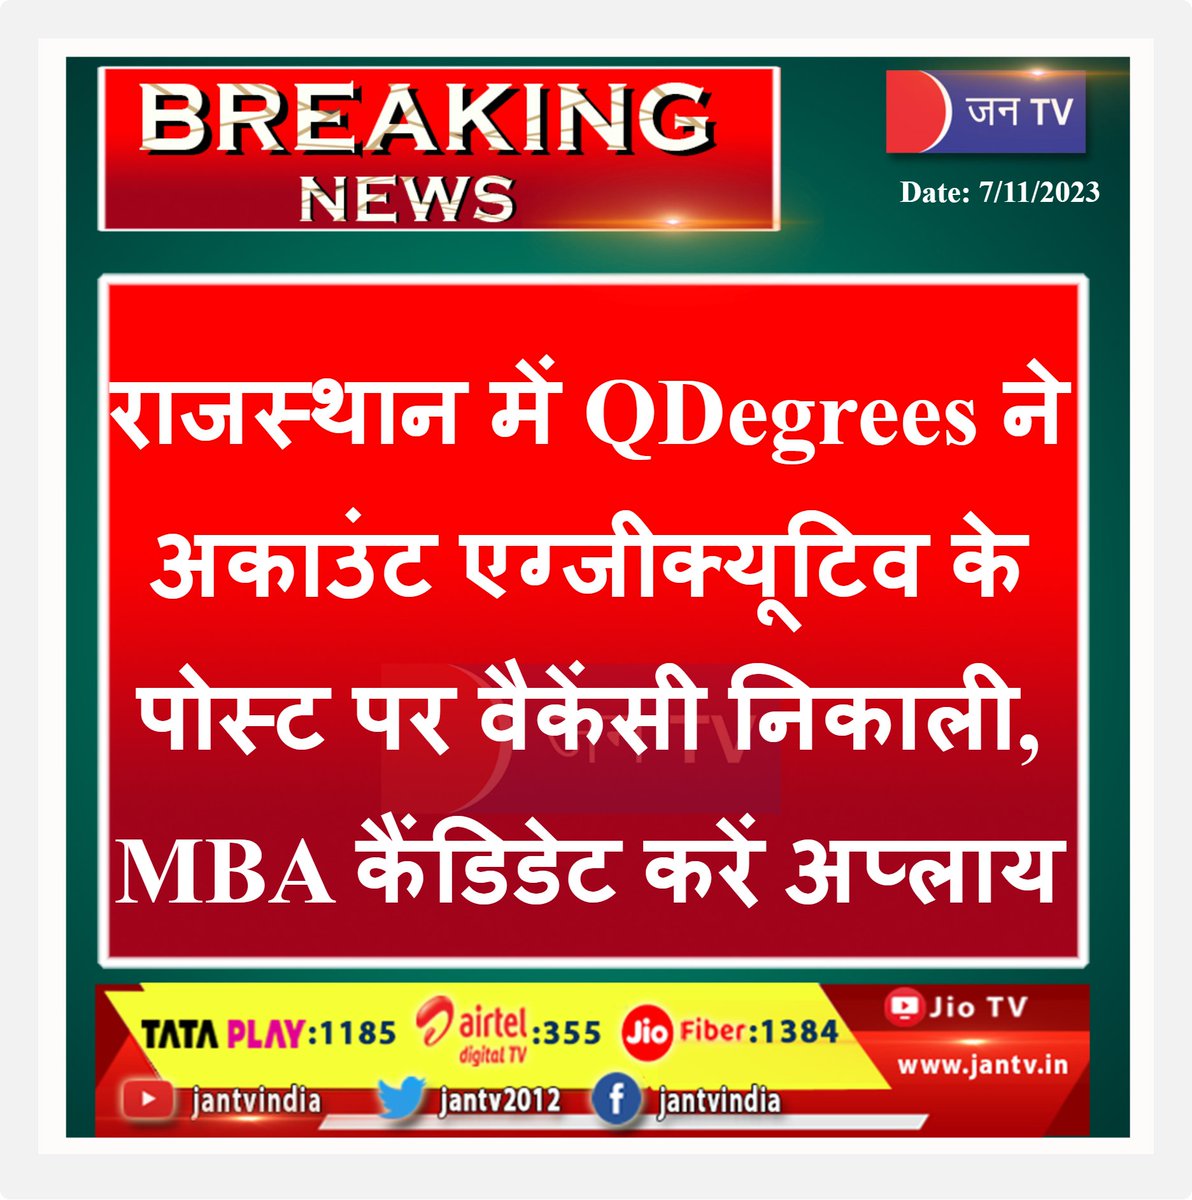 #privatejob #QDegrees #AccountExecutive #Vacancy #announced #MBA #candidates #Rajasthan #CareerGrowth #CareerSuccess #jantv_SUS